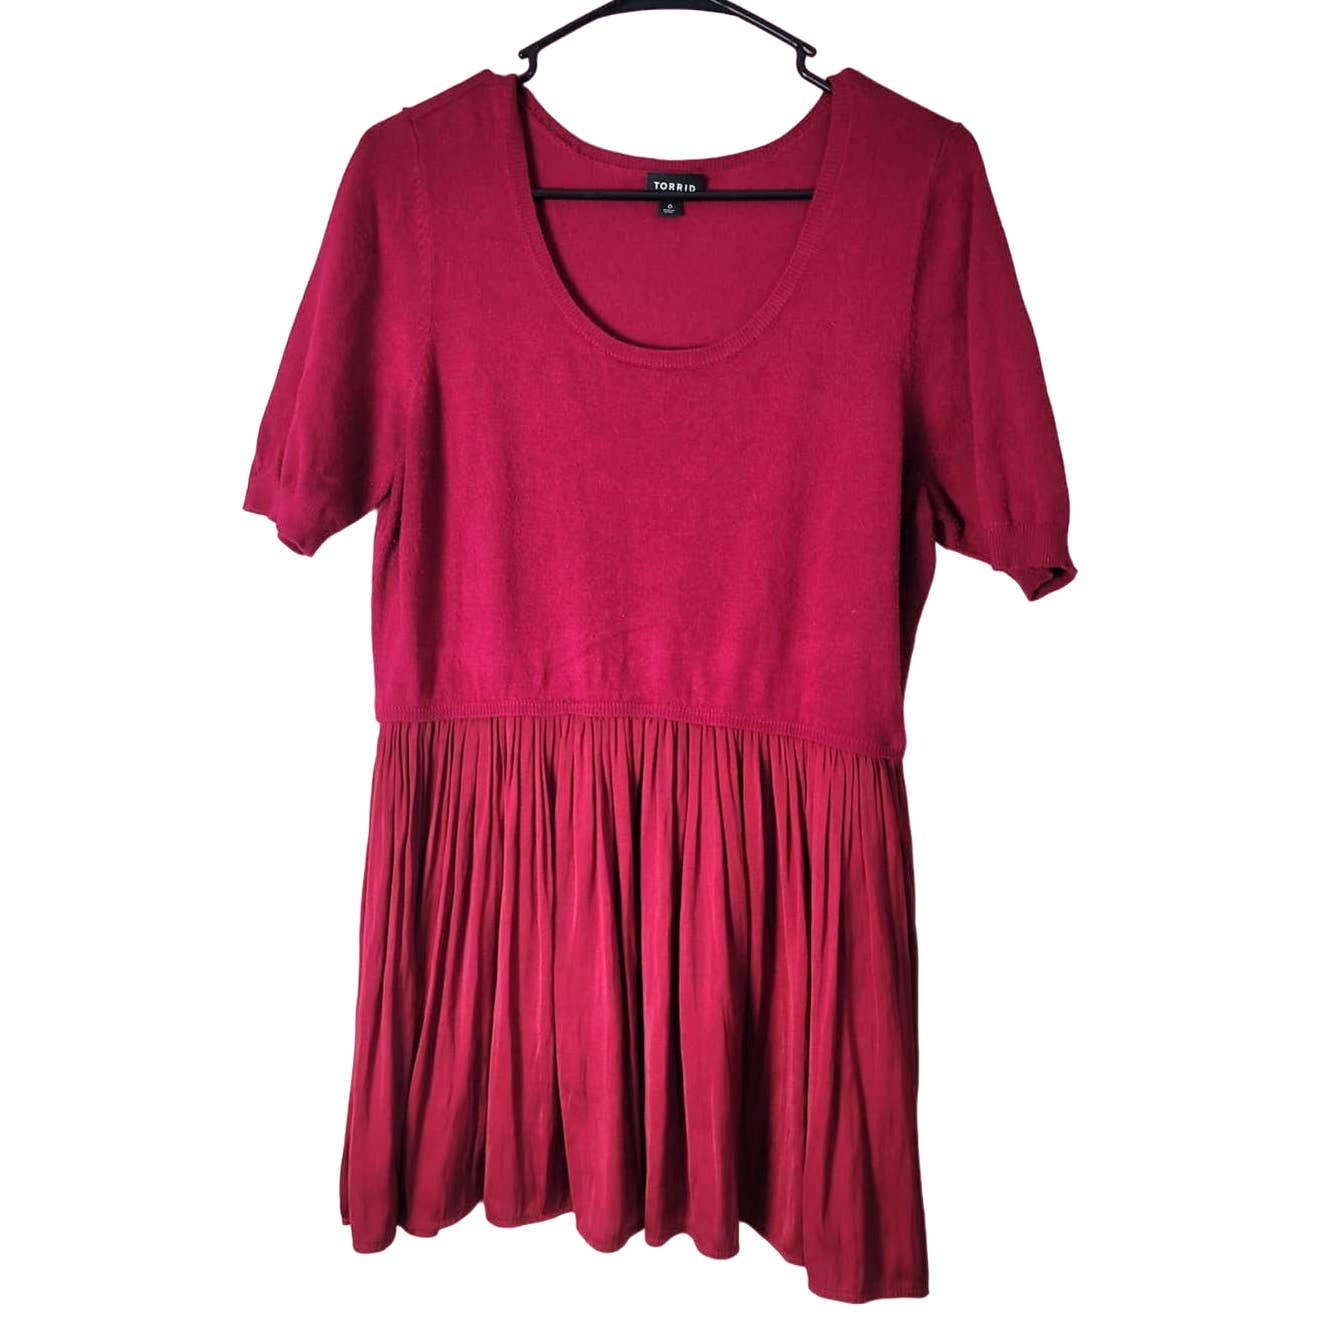 Torrid Babydoll Top Dark Pink Short Sleeve Knit Plus Size 0/0X